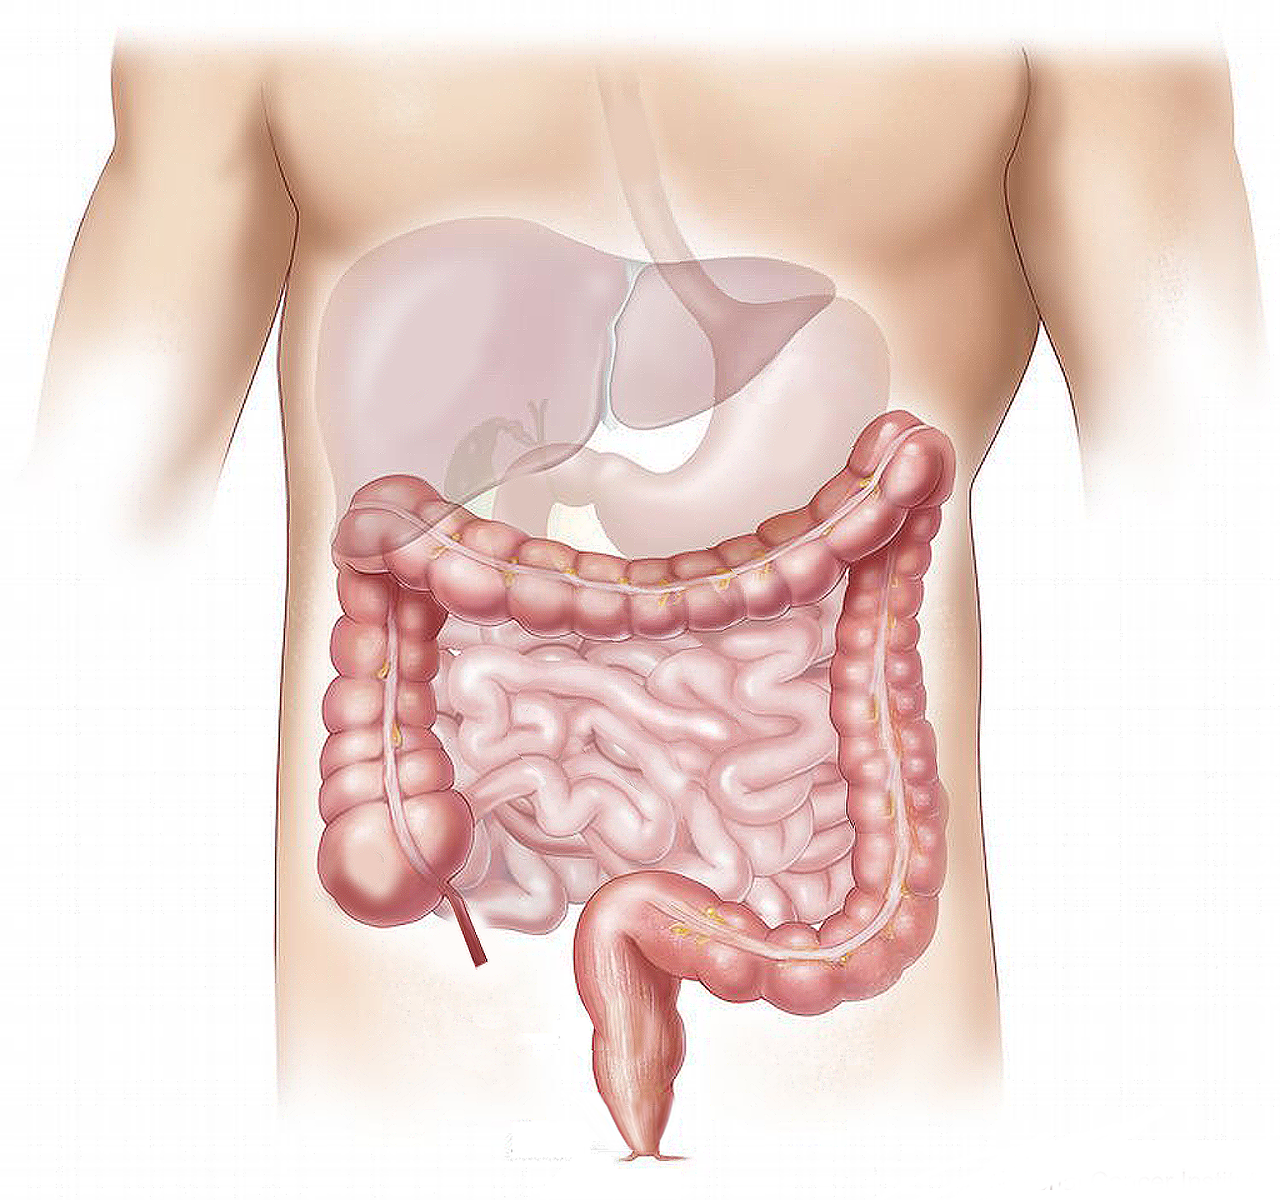 Offal,marking,medical,intestine,liver - free image from needpix.com